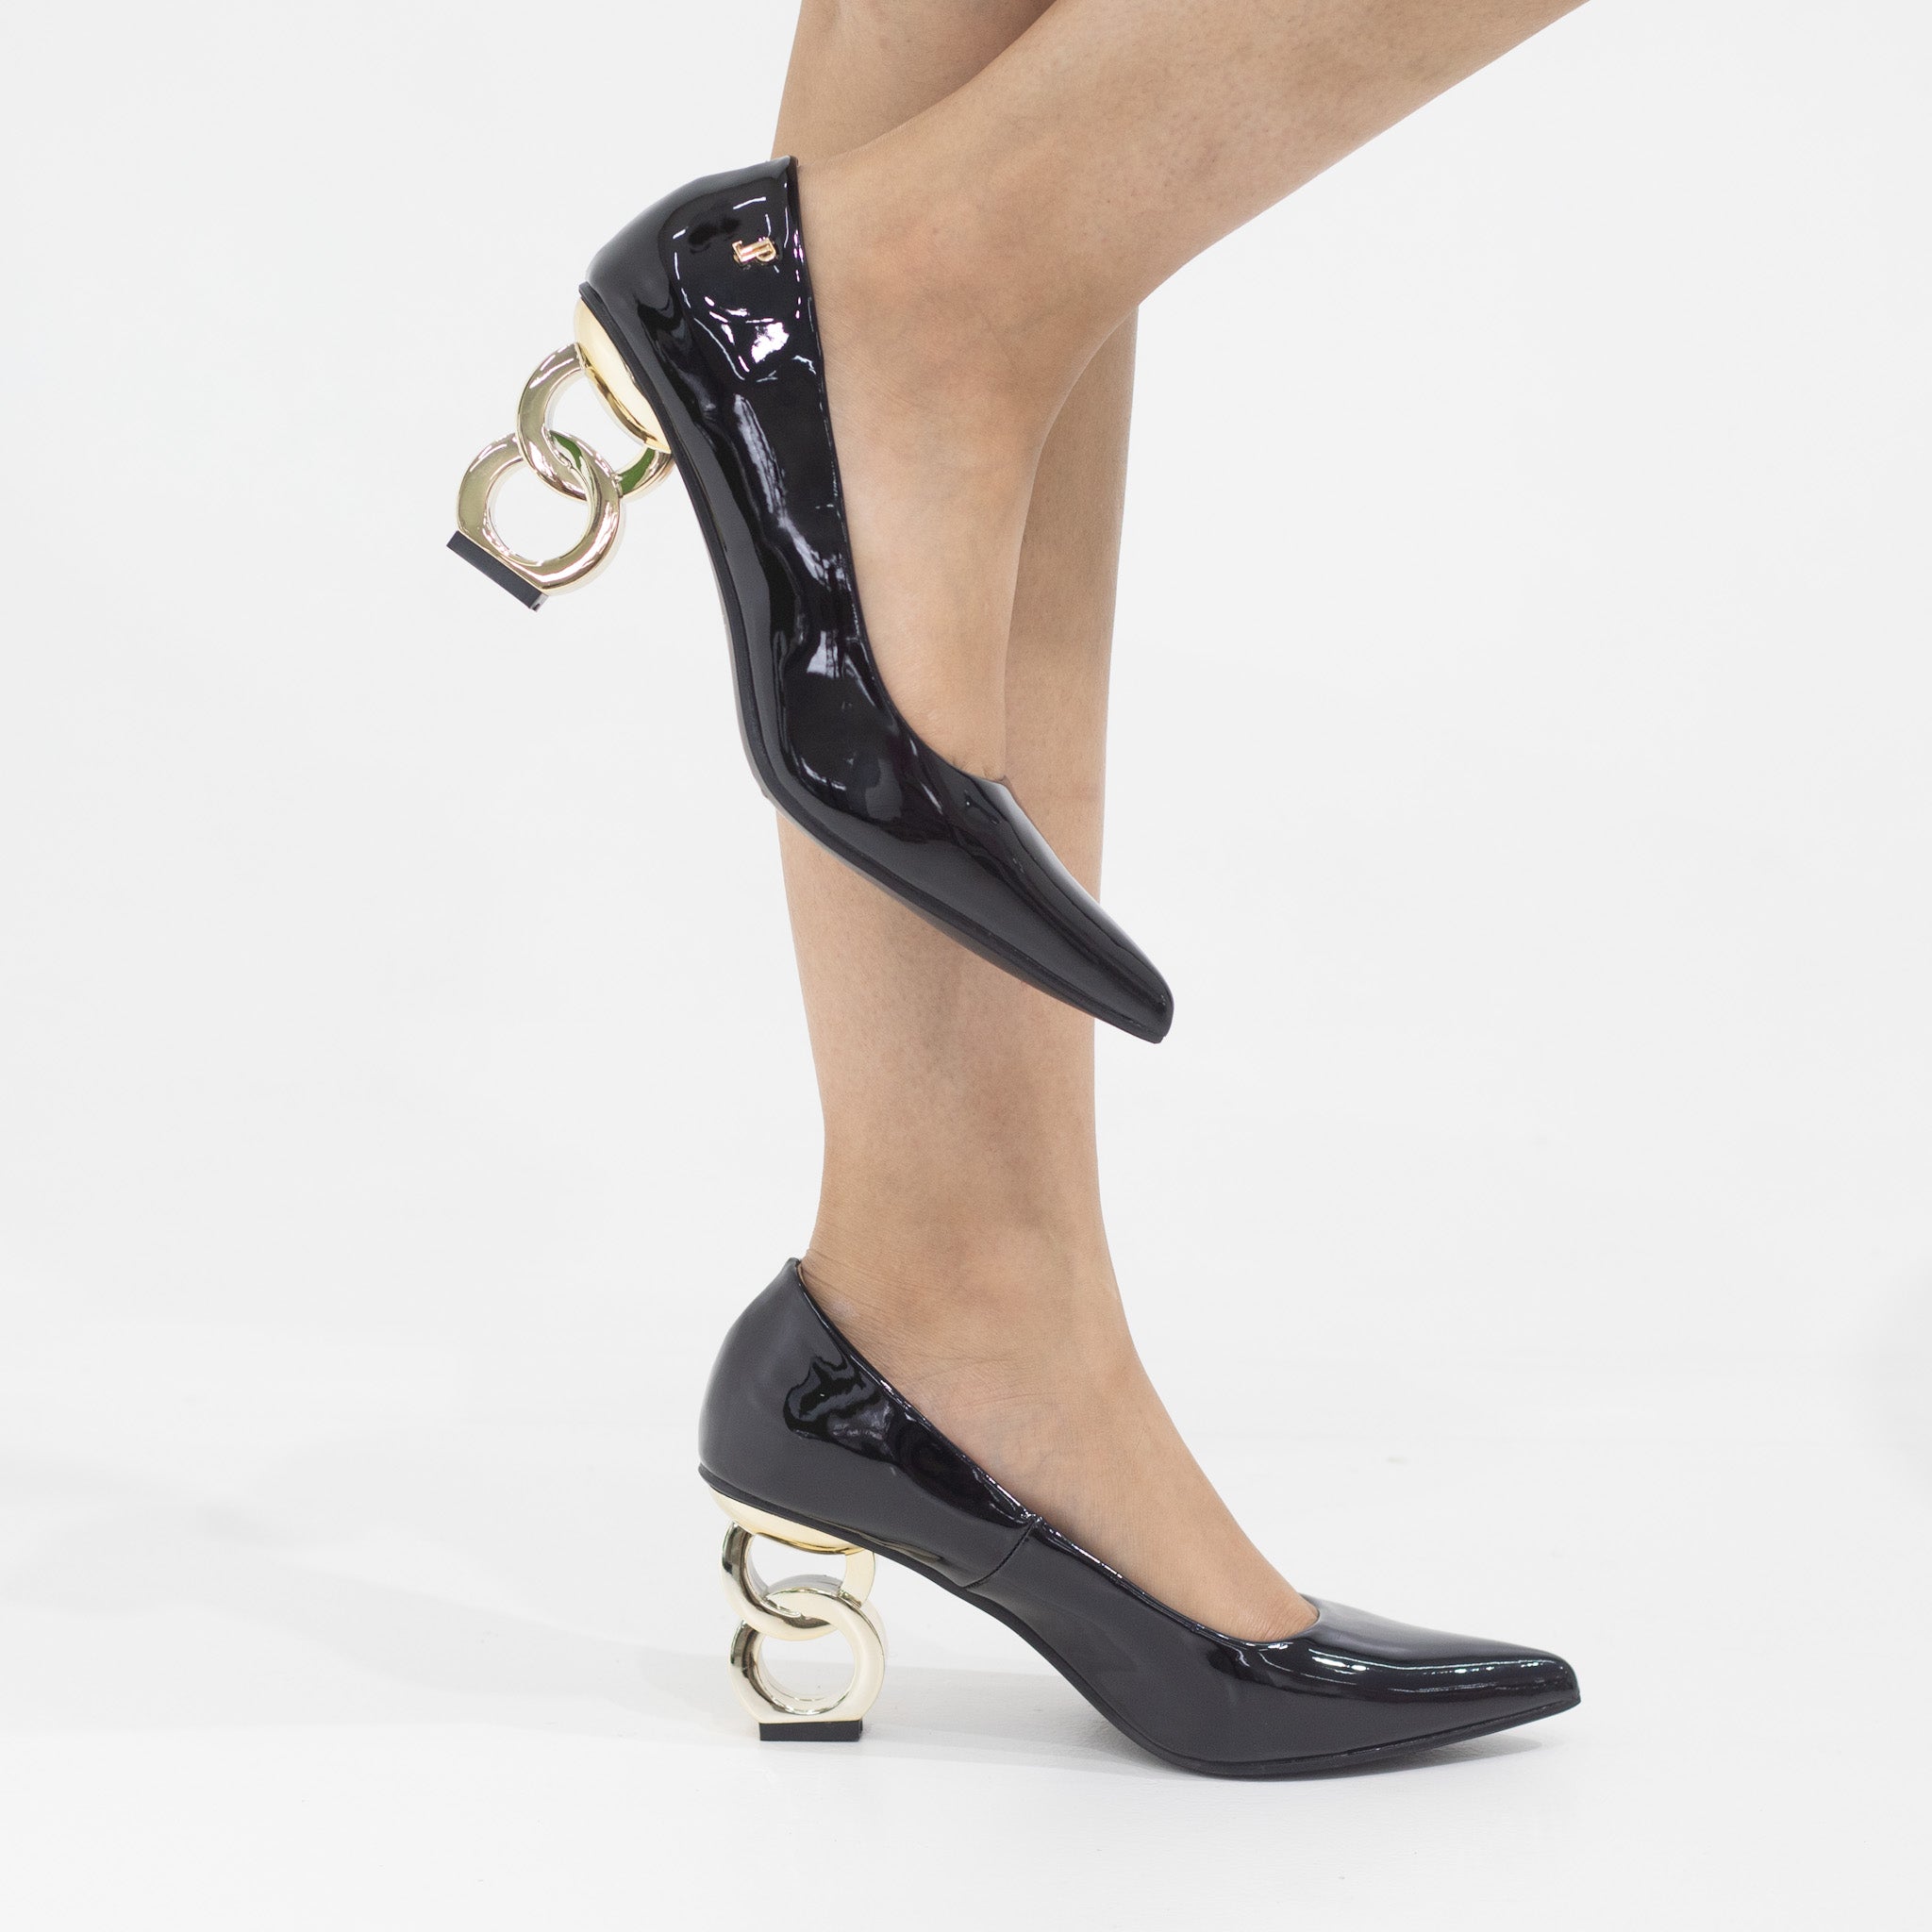 Black high heel shoe with Gold circle heel